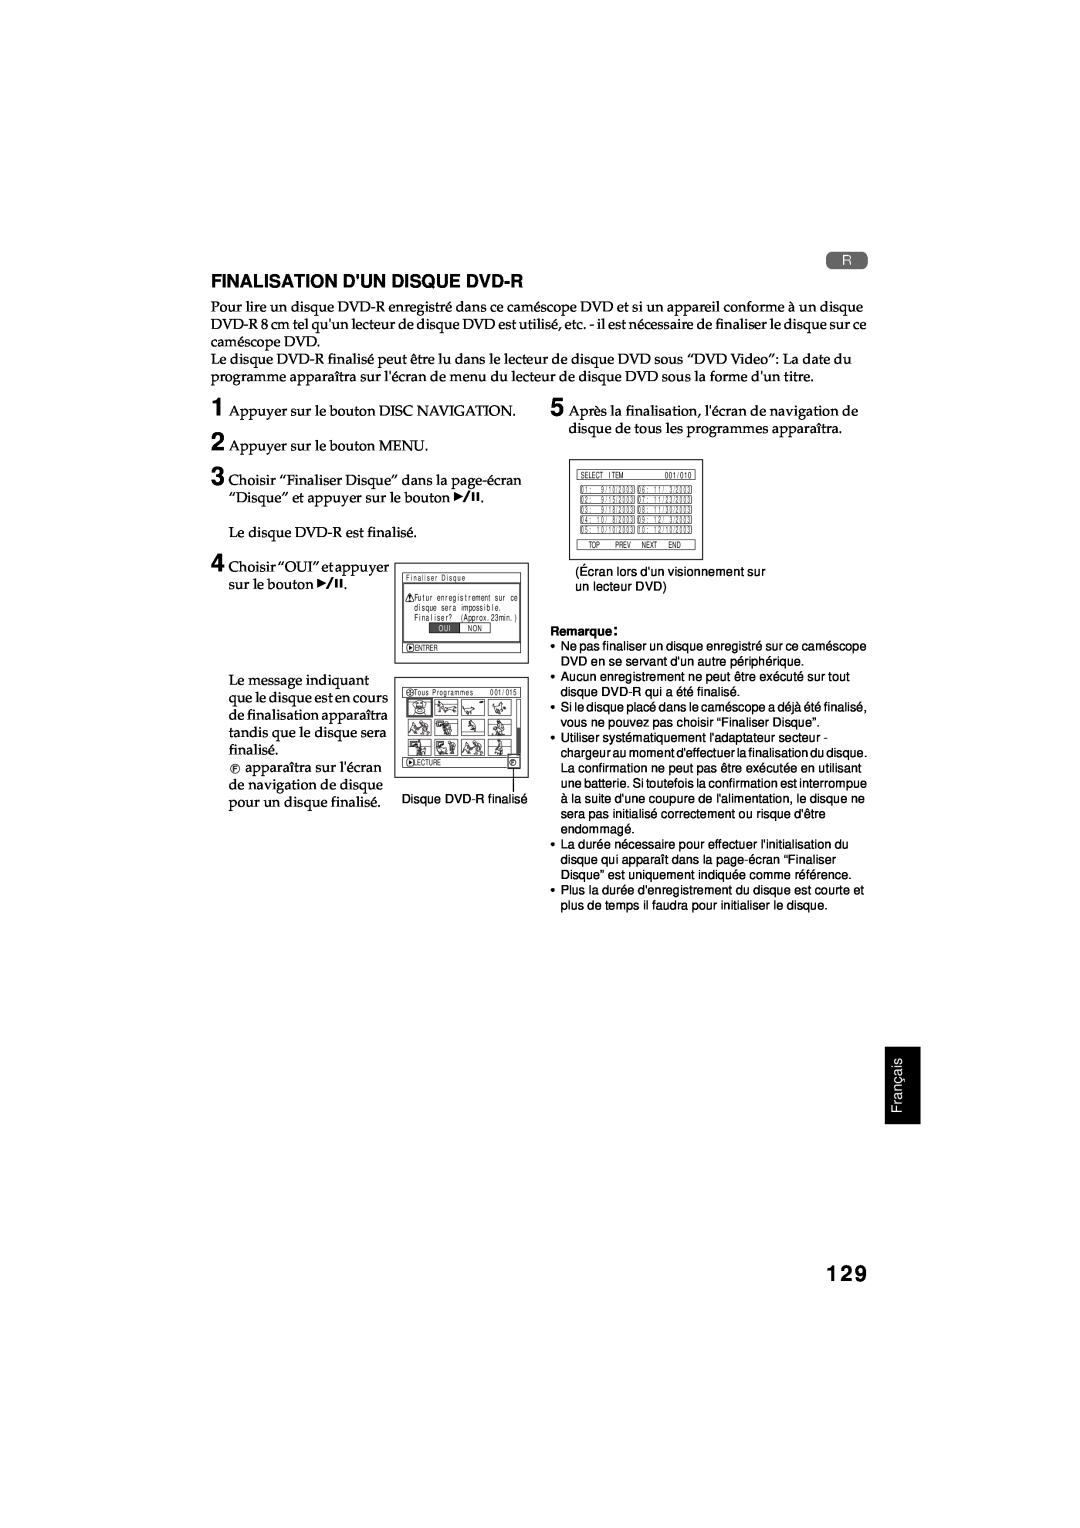 Hitachi DZ-MV380A manual Finalisation Dun Disque Dvd-R, Français 